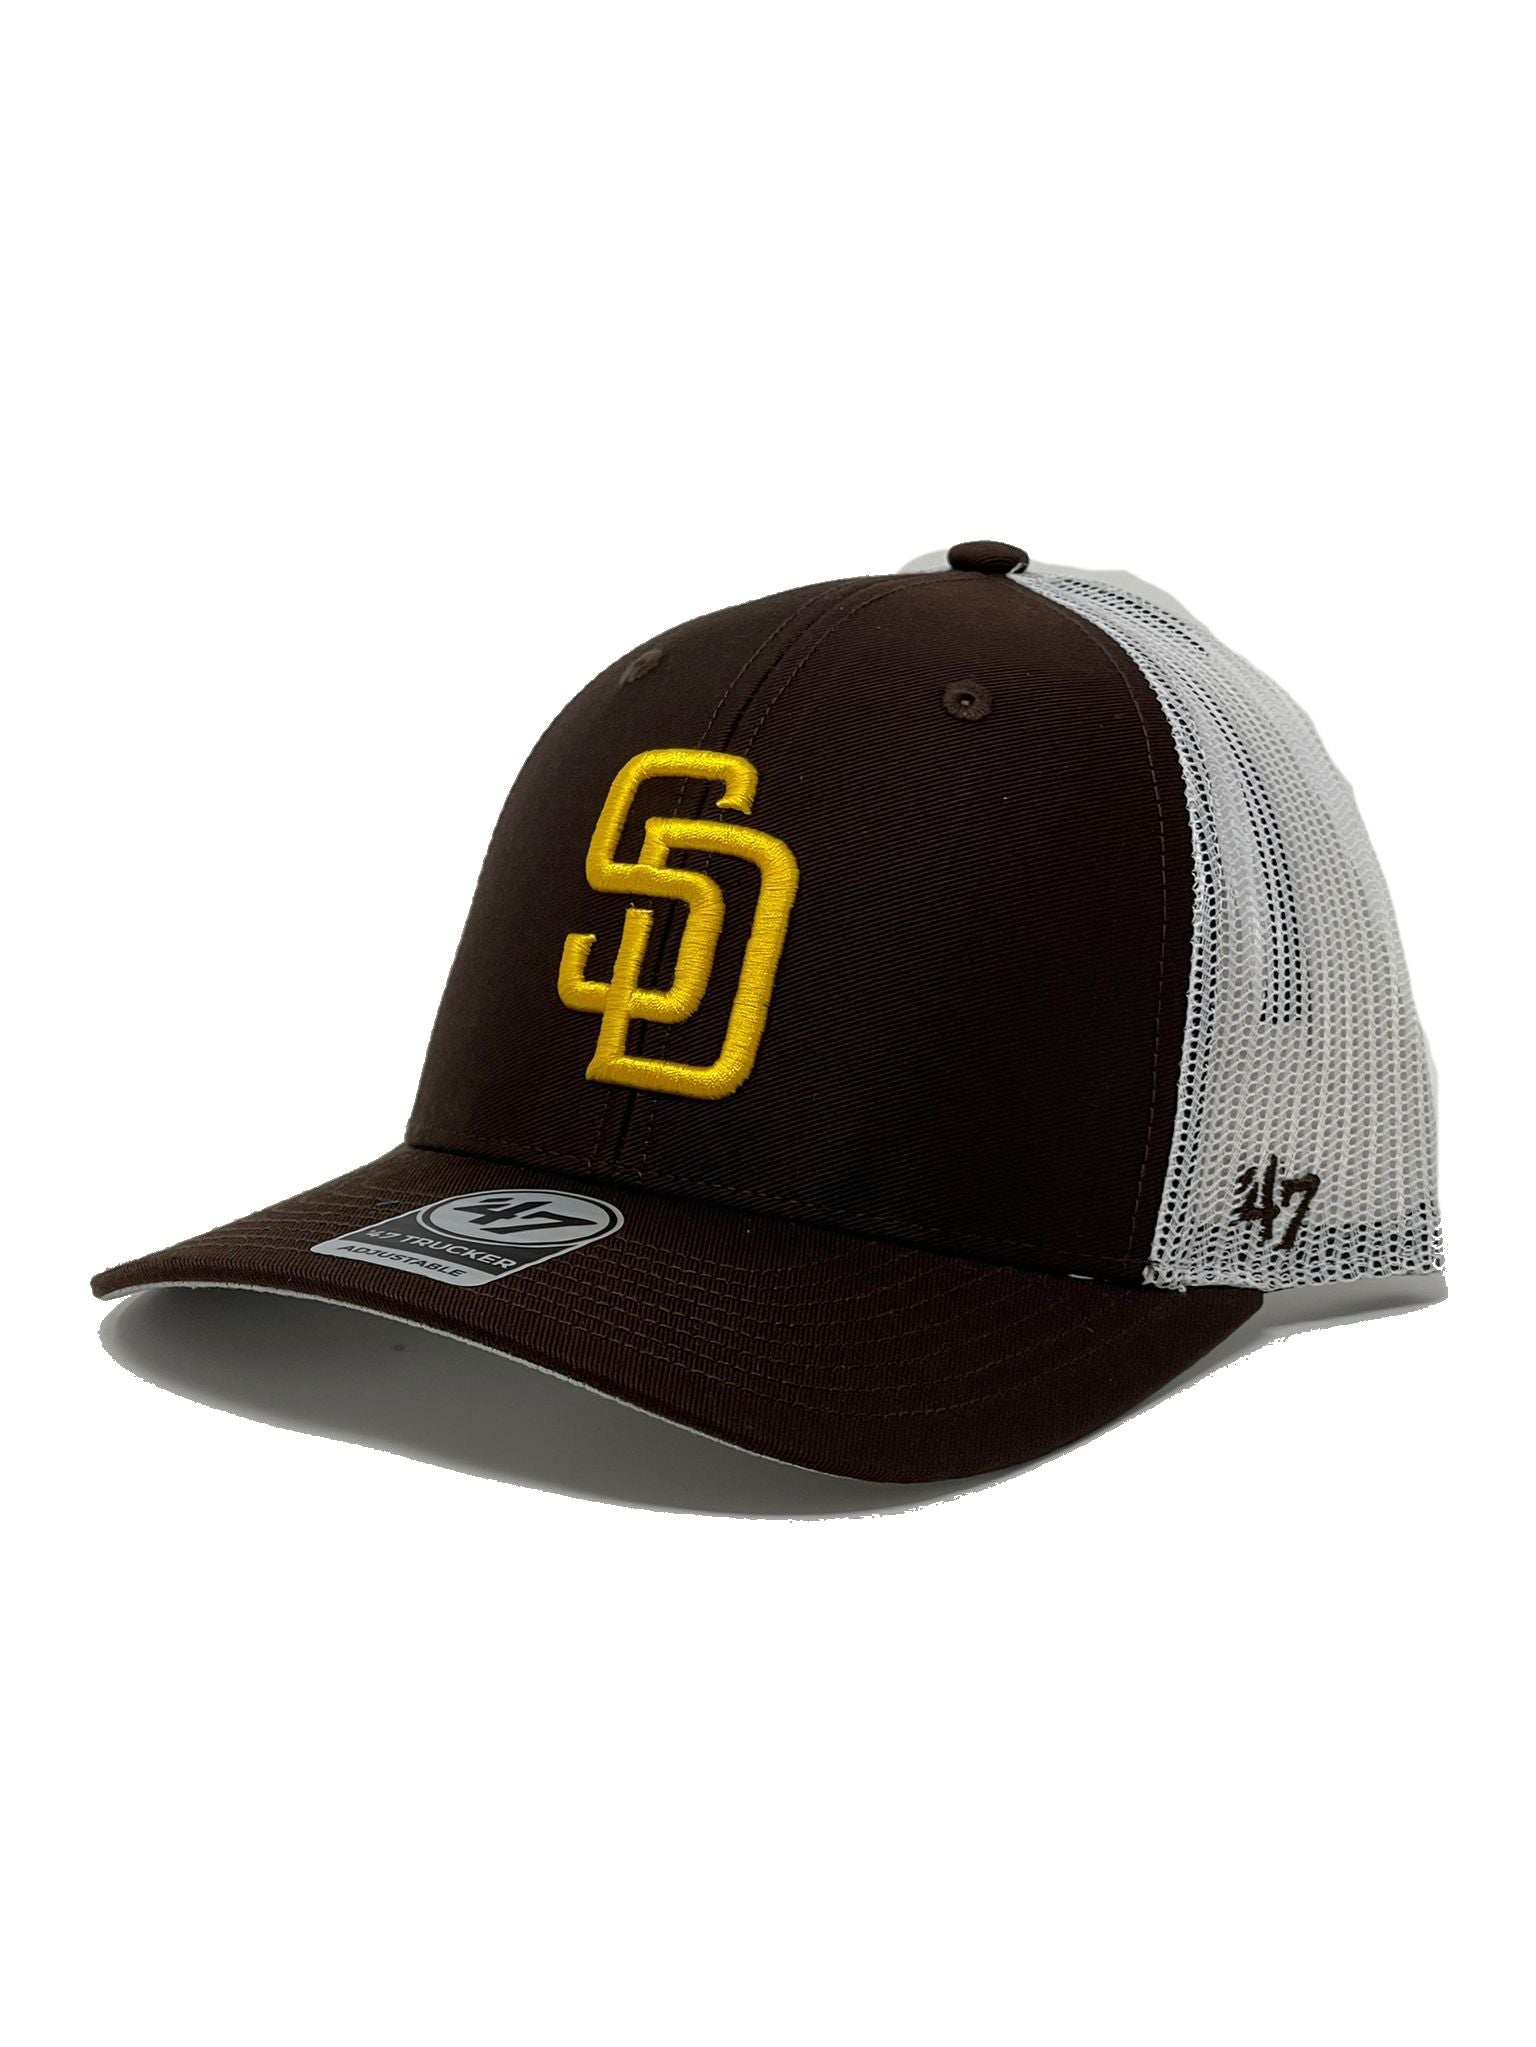 San Diego Padres Brown '47 Trucker Hat